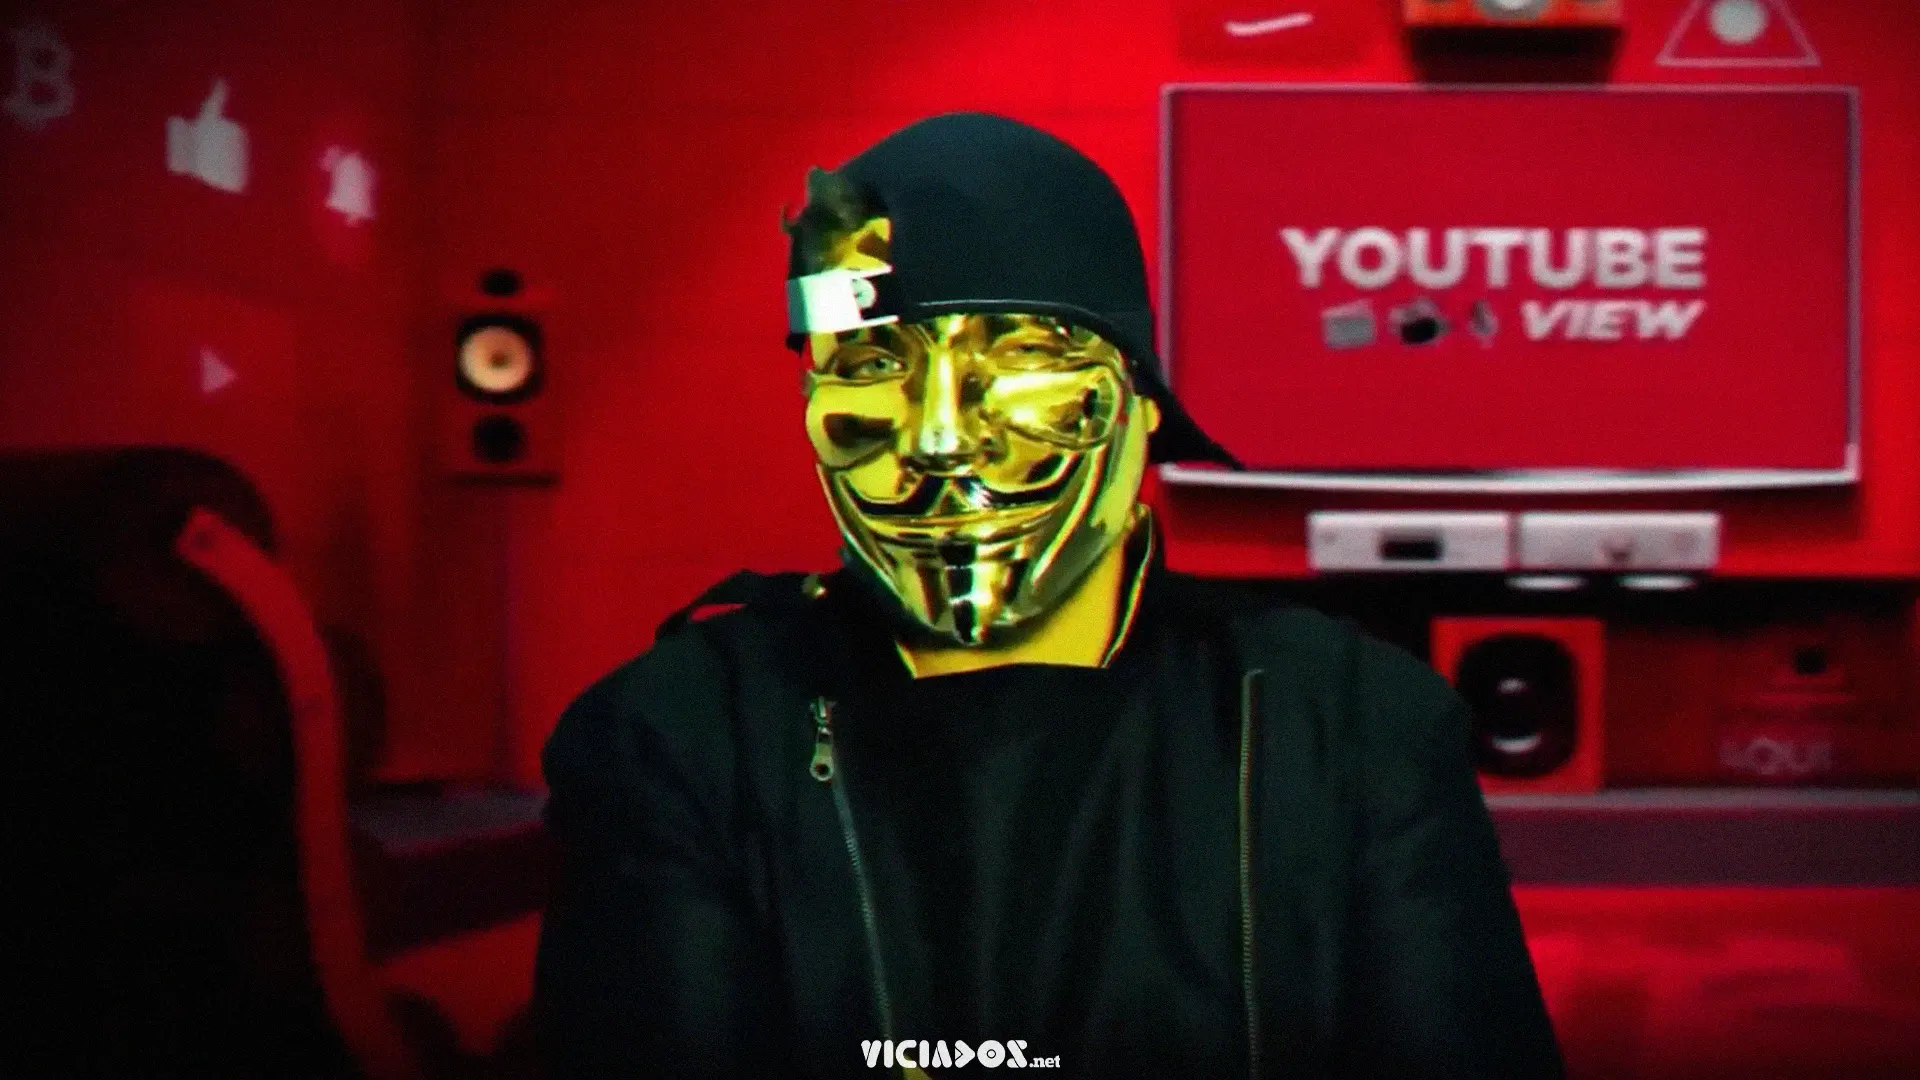 Contente ConTV | Youtuber mascarado finalmente revela o rosto 2023 Viciados